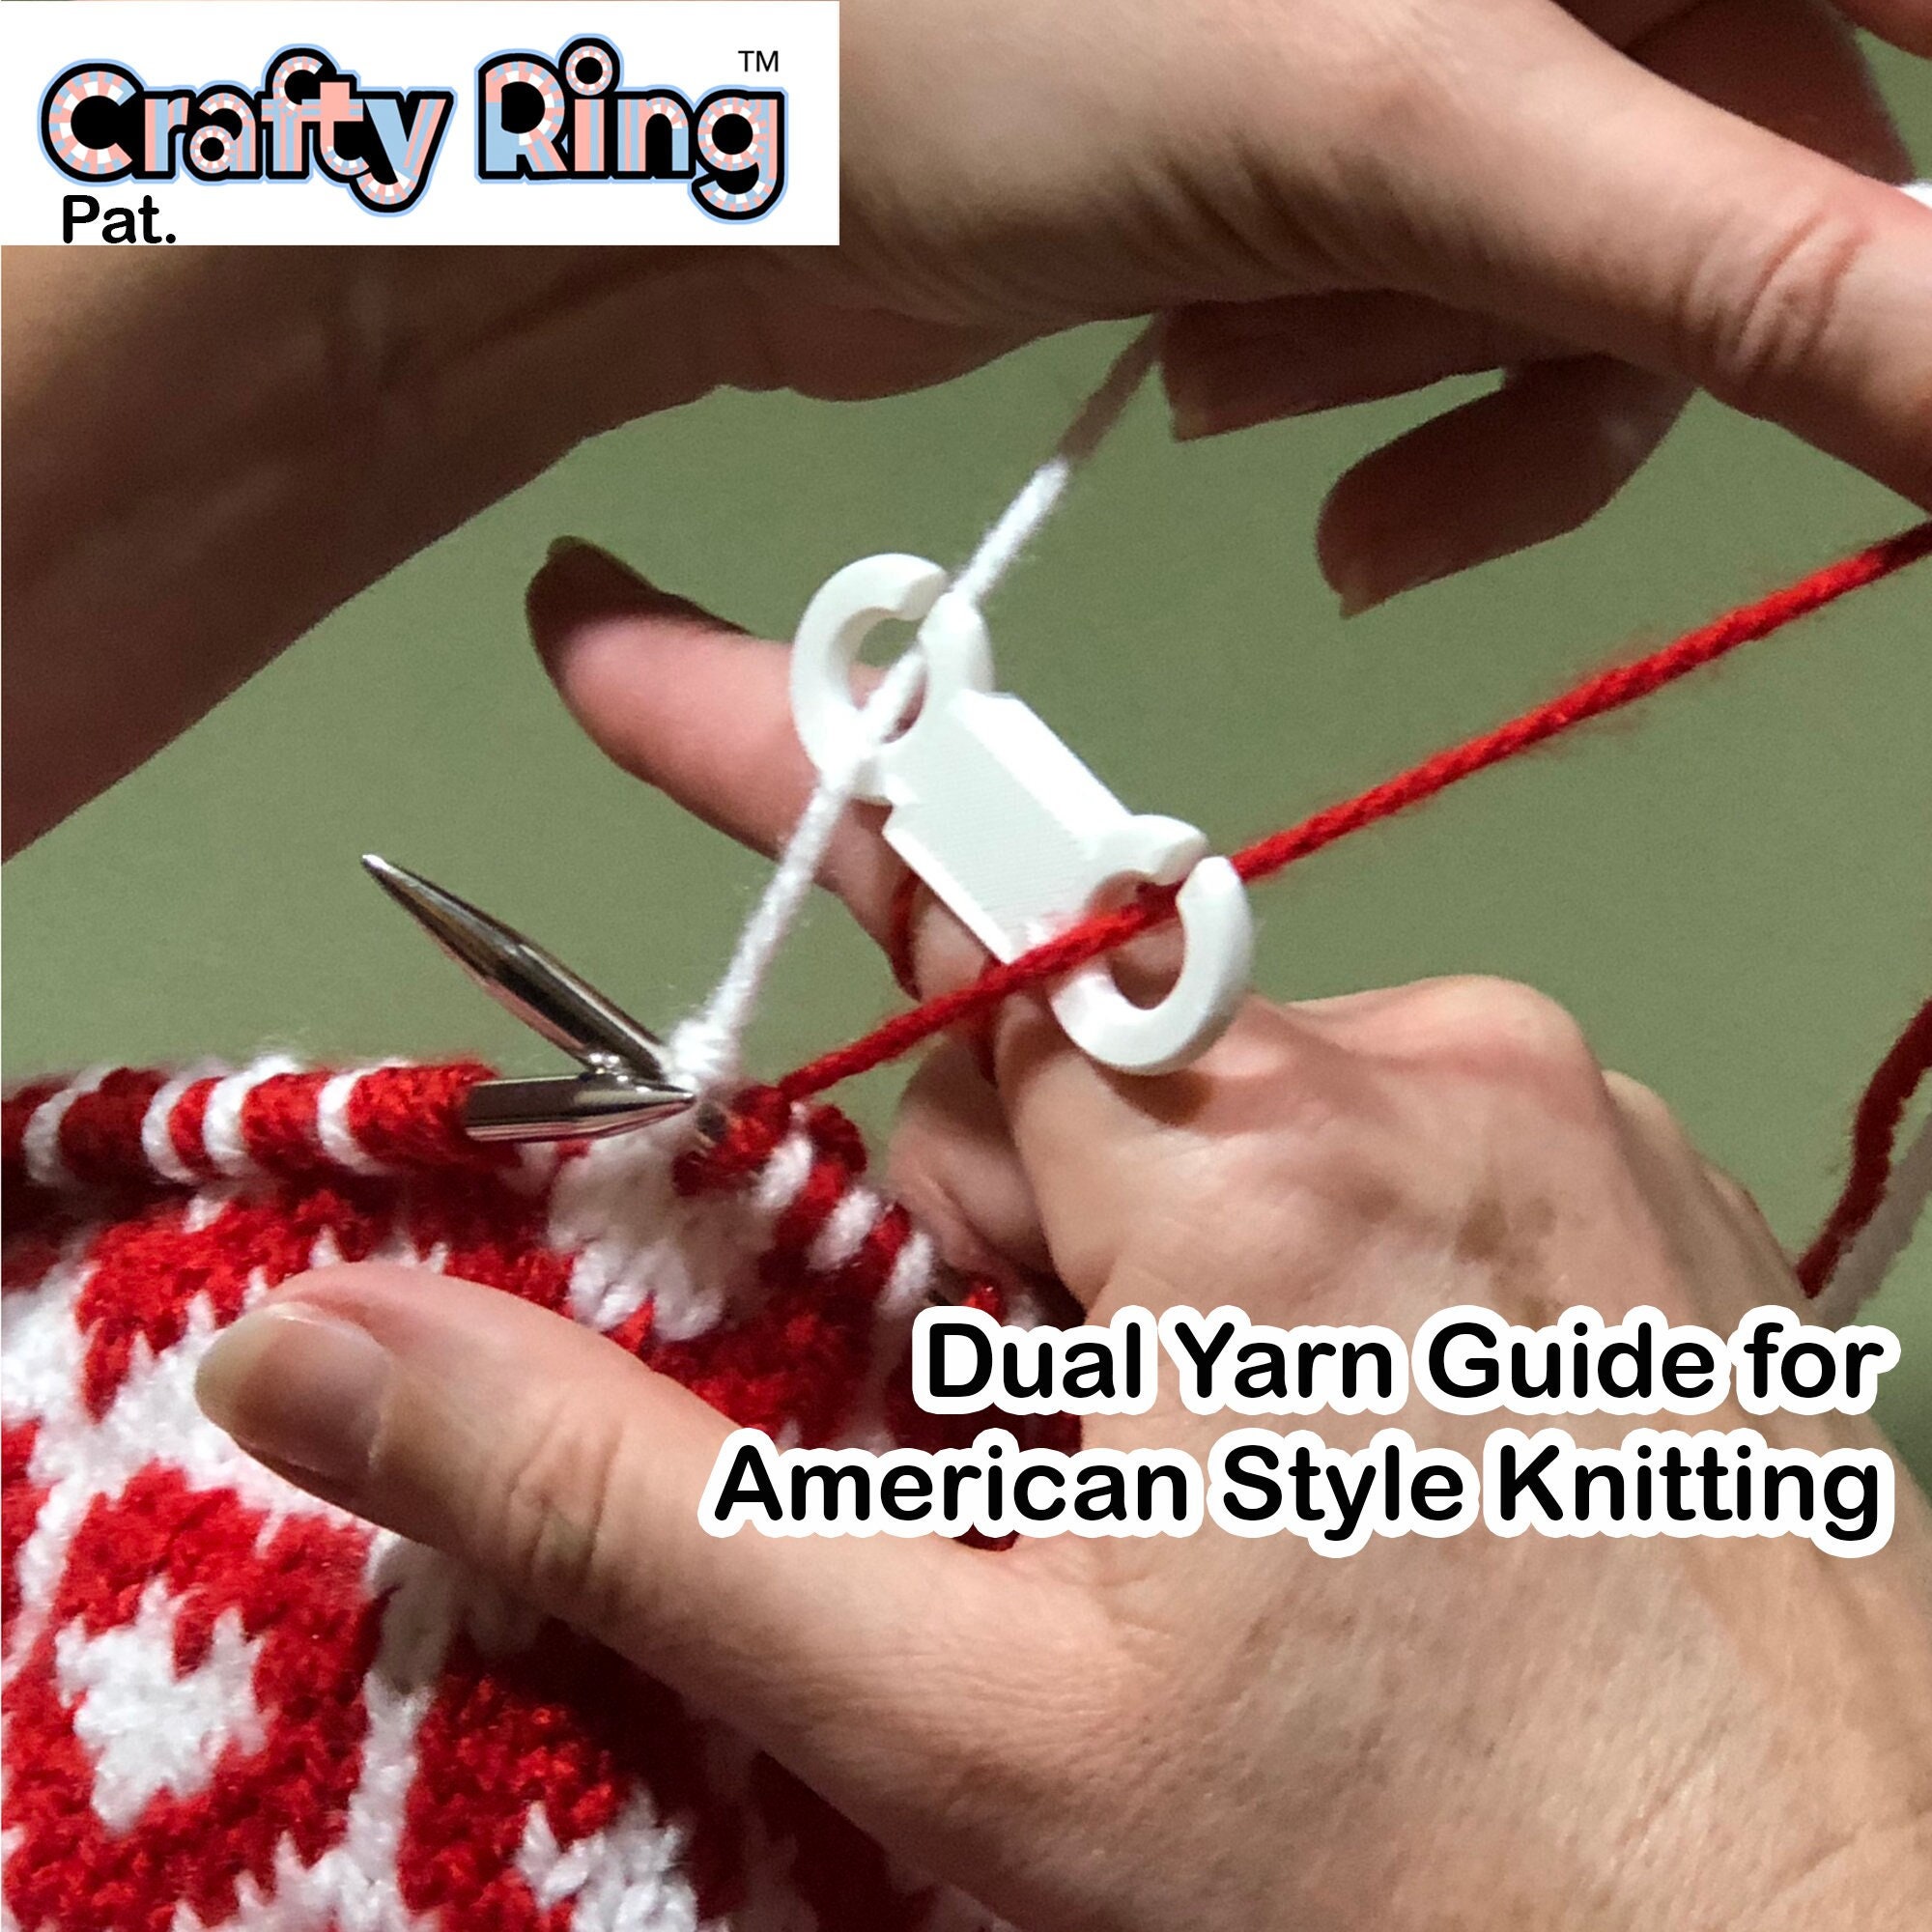 The Original 2 Loop Strand Knitting Ring, the Best Crochet Ring